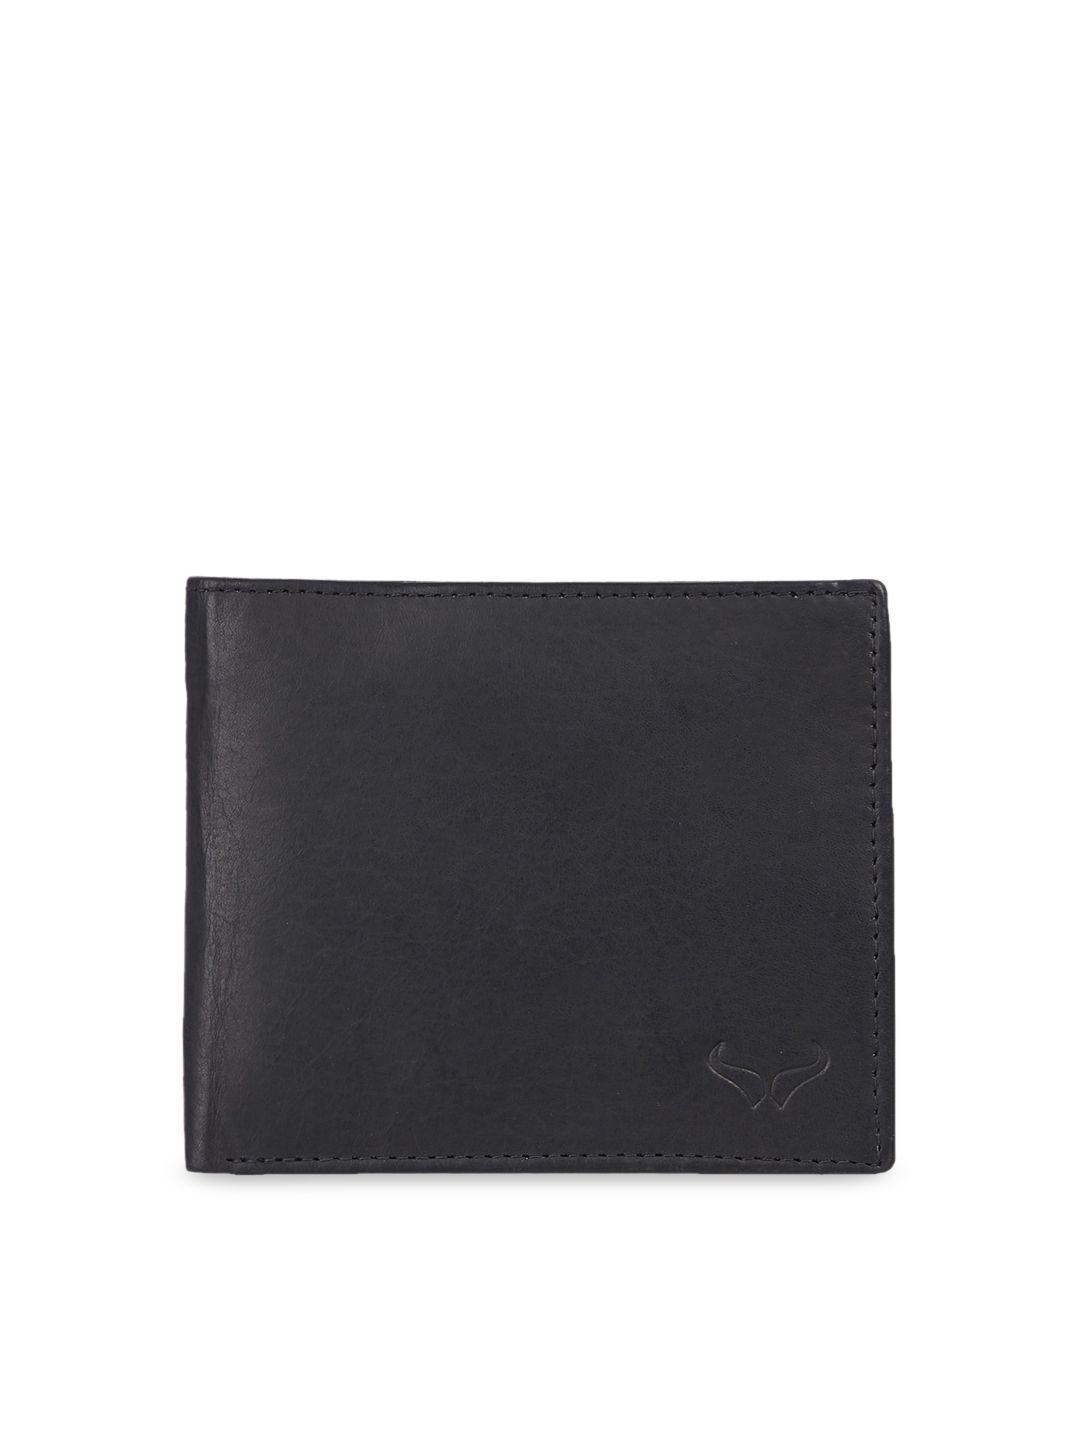 bern men black leather solid two fold wallet